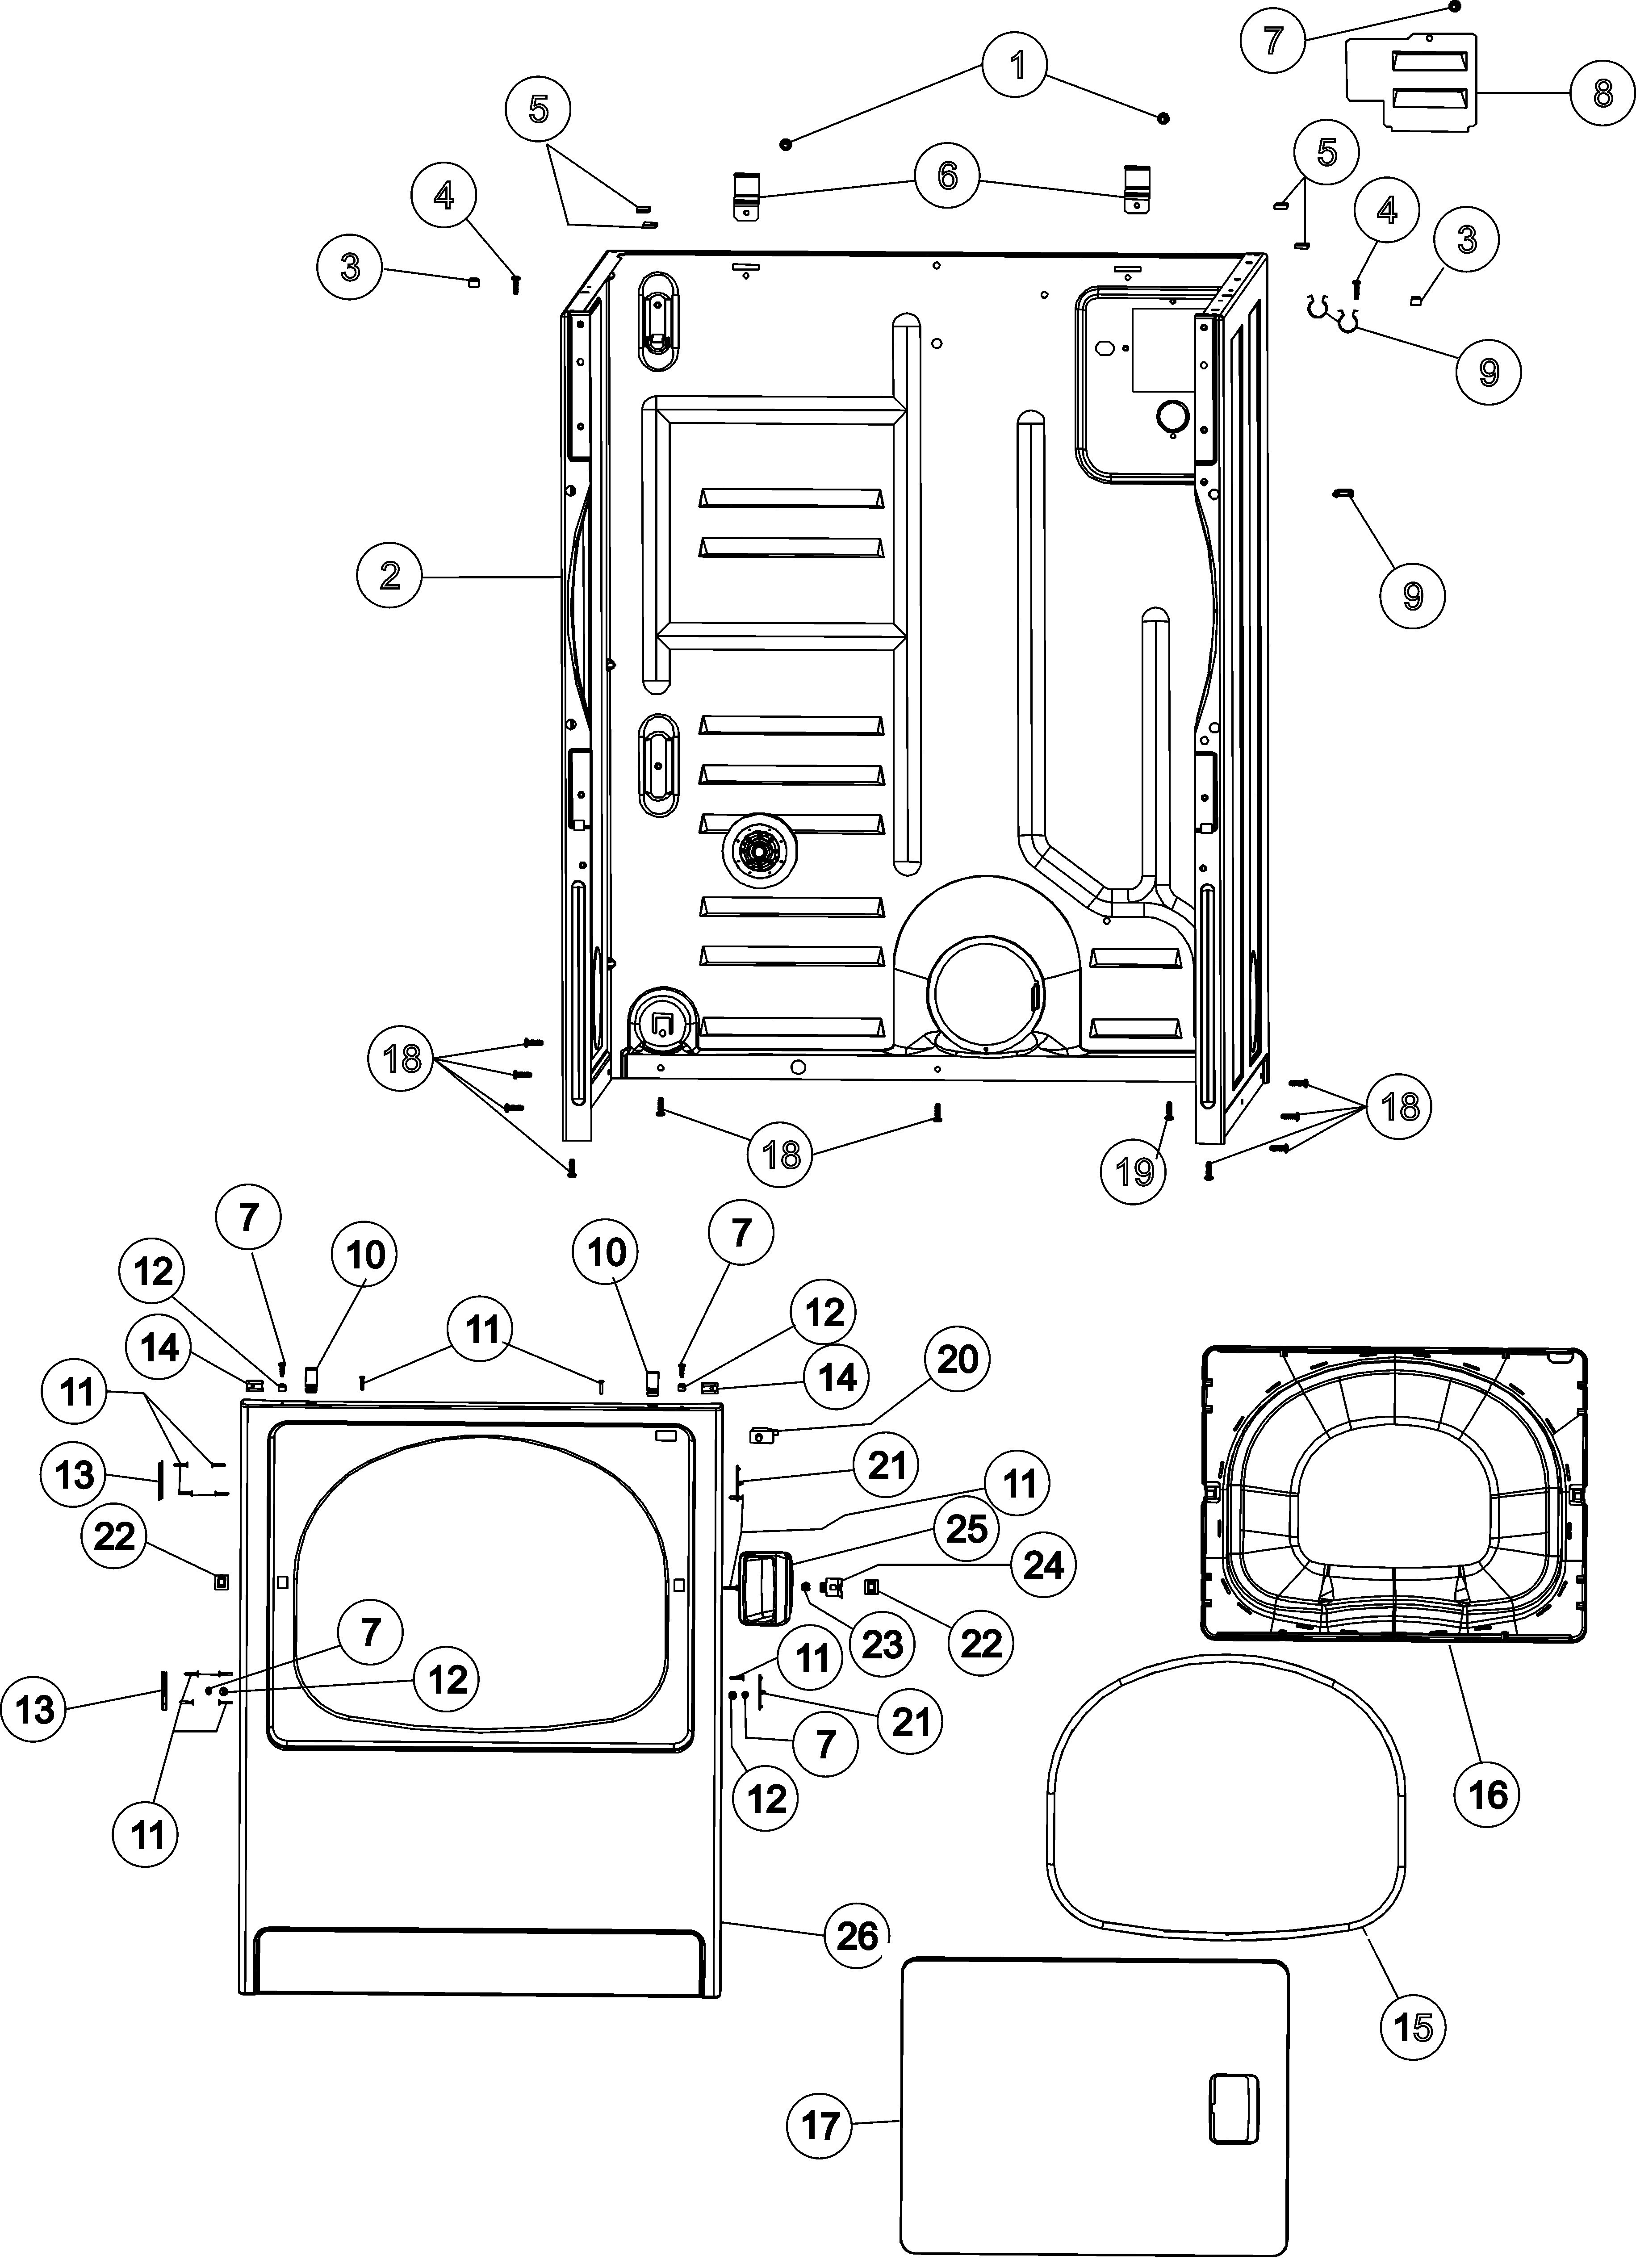 Amana Dryer Parts Diagram Wiring Diagram for Ge Dryer Door Switch Simple Amana Dryer Wiring Of Amana Dryer Parts Diagram